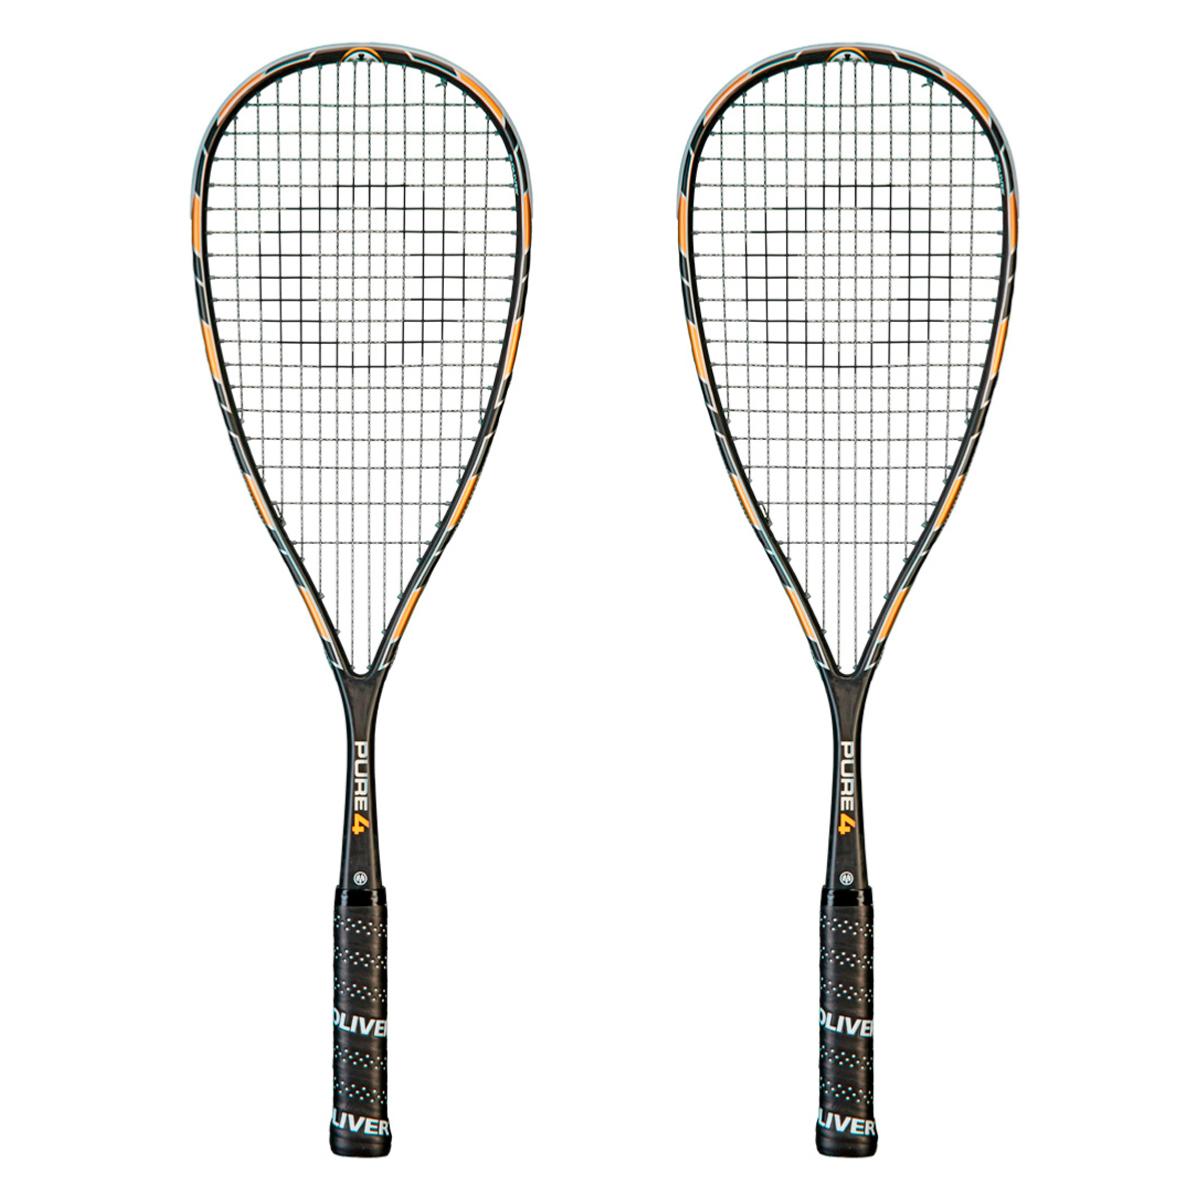 ongezond bedriegen Somatische cel Buy Oliver Pure 4 2 Squash Rackets Pack at amazing prices